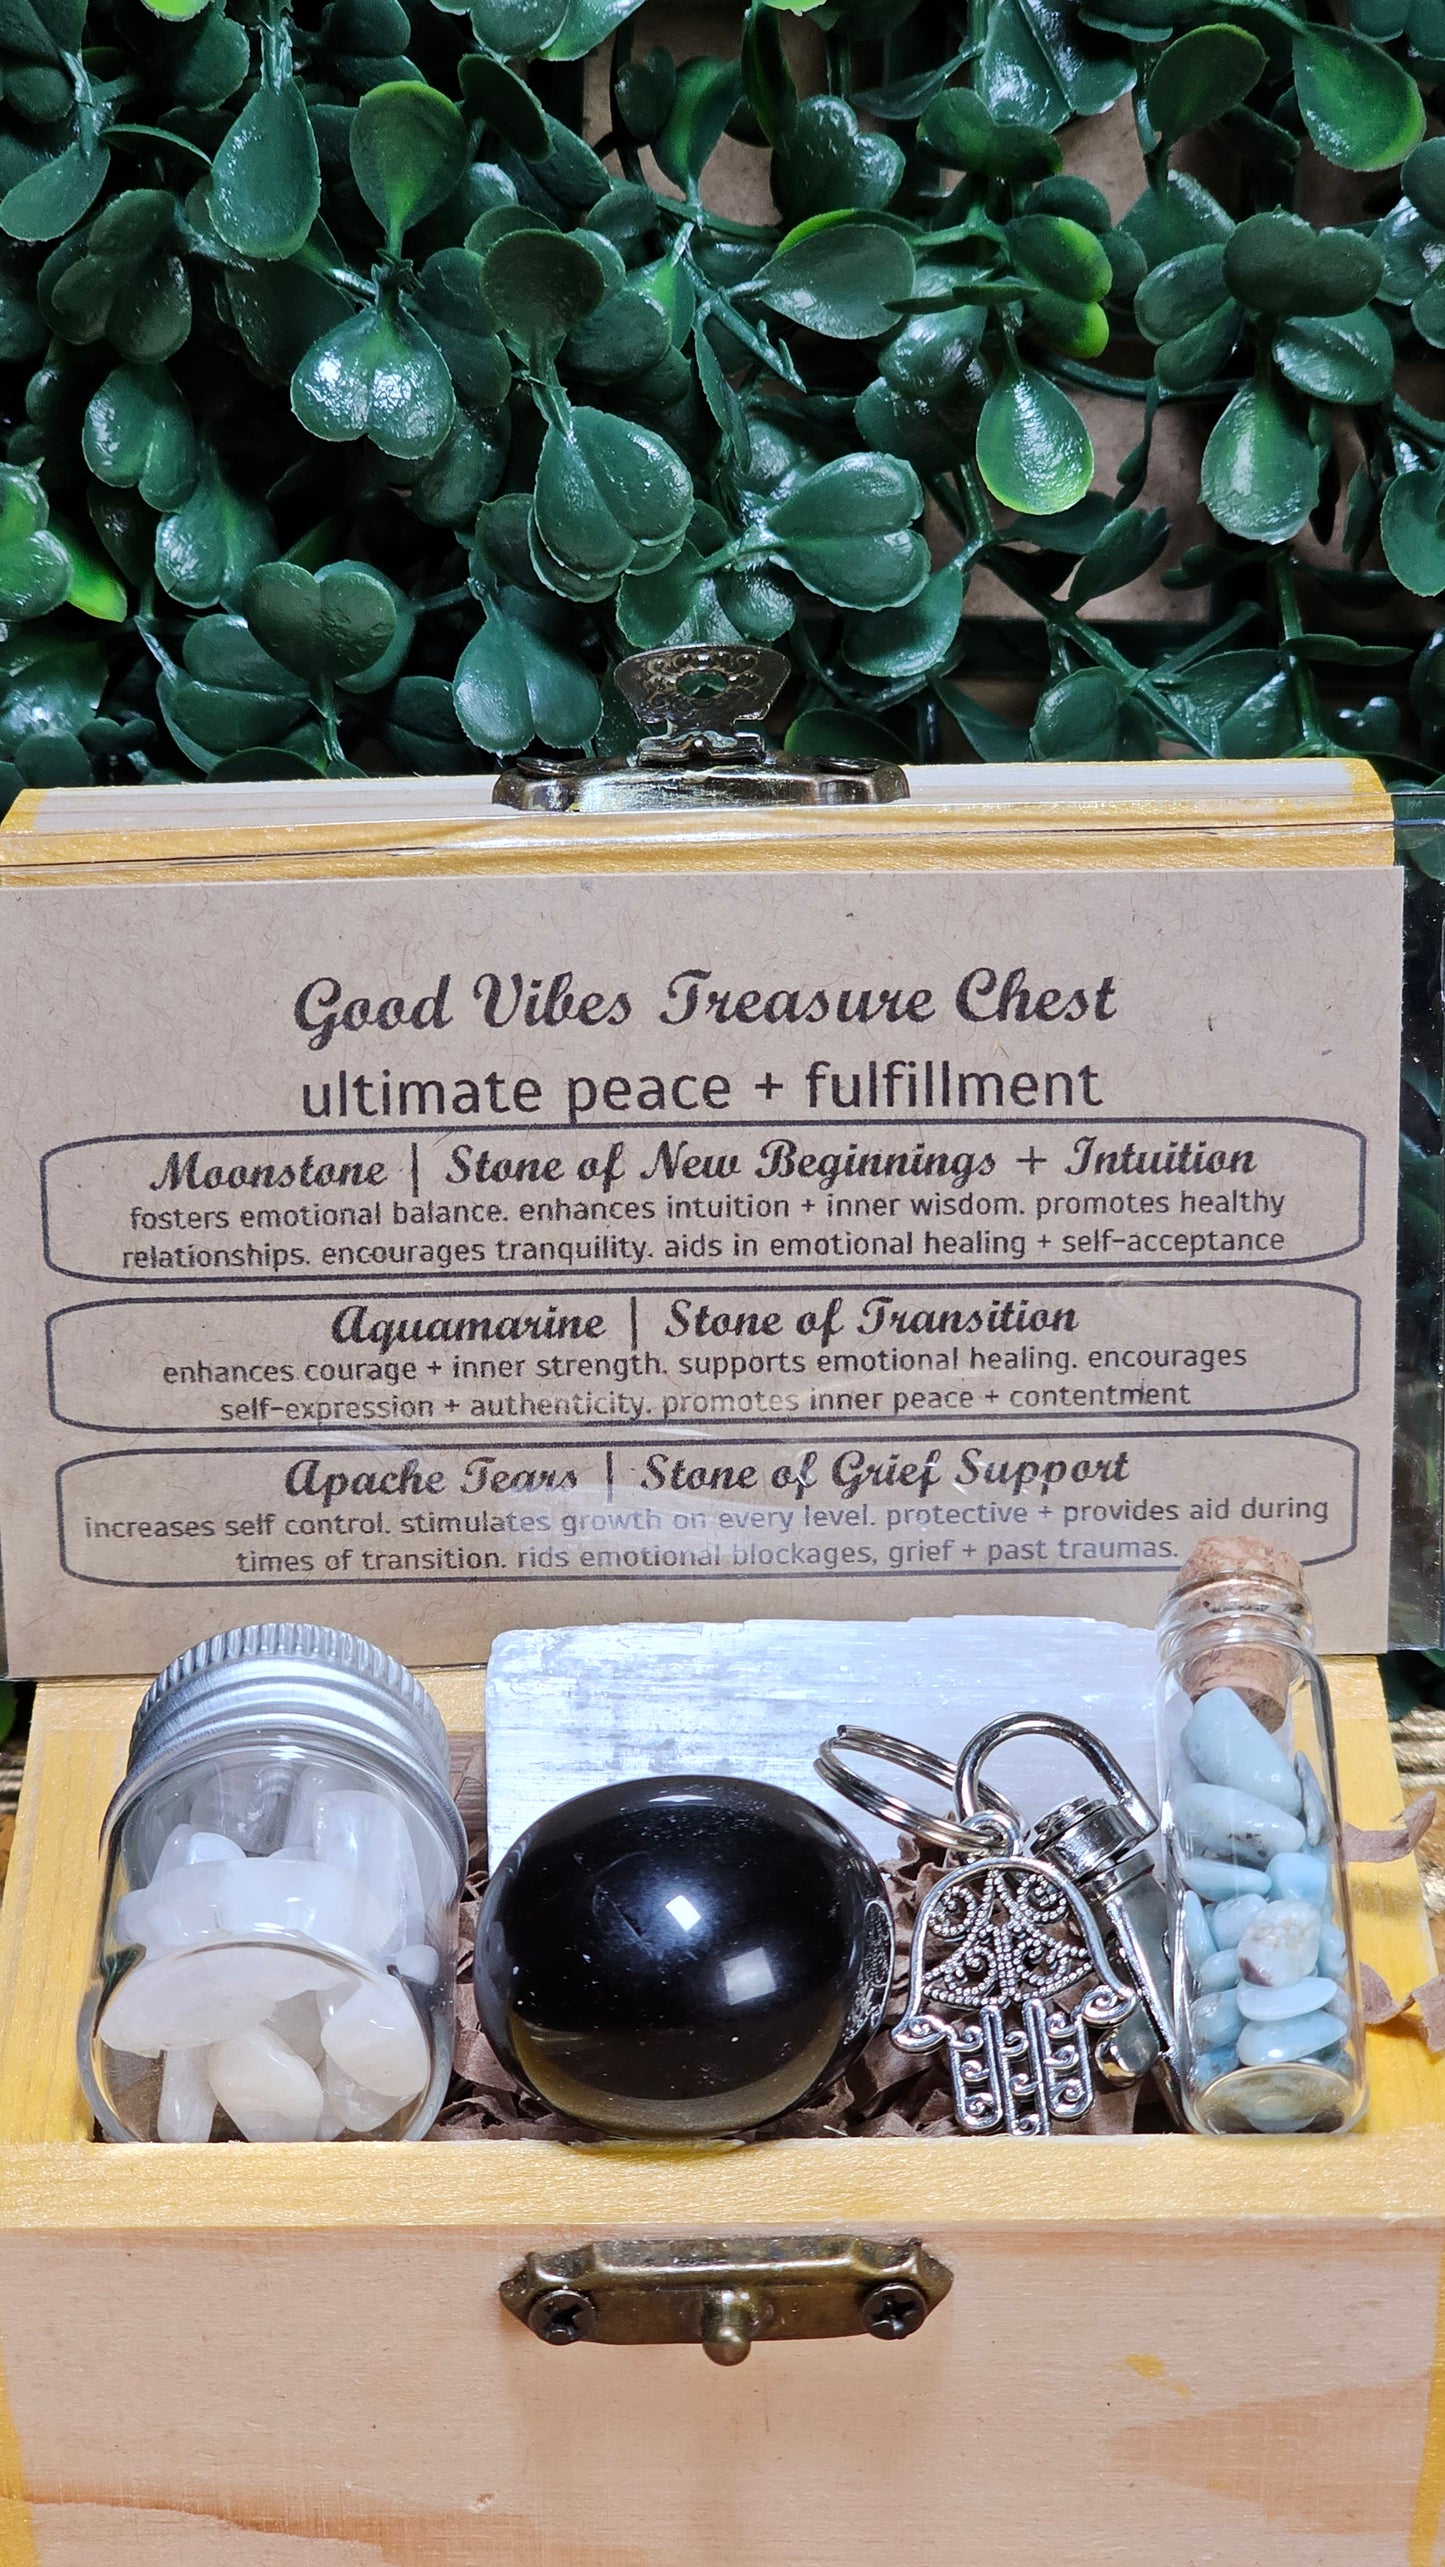 Ultimate Peace and Fulfillment - Treasure Chest